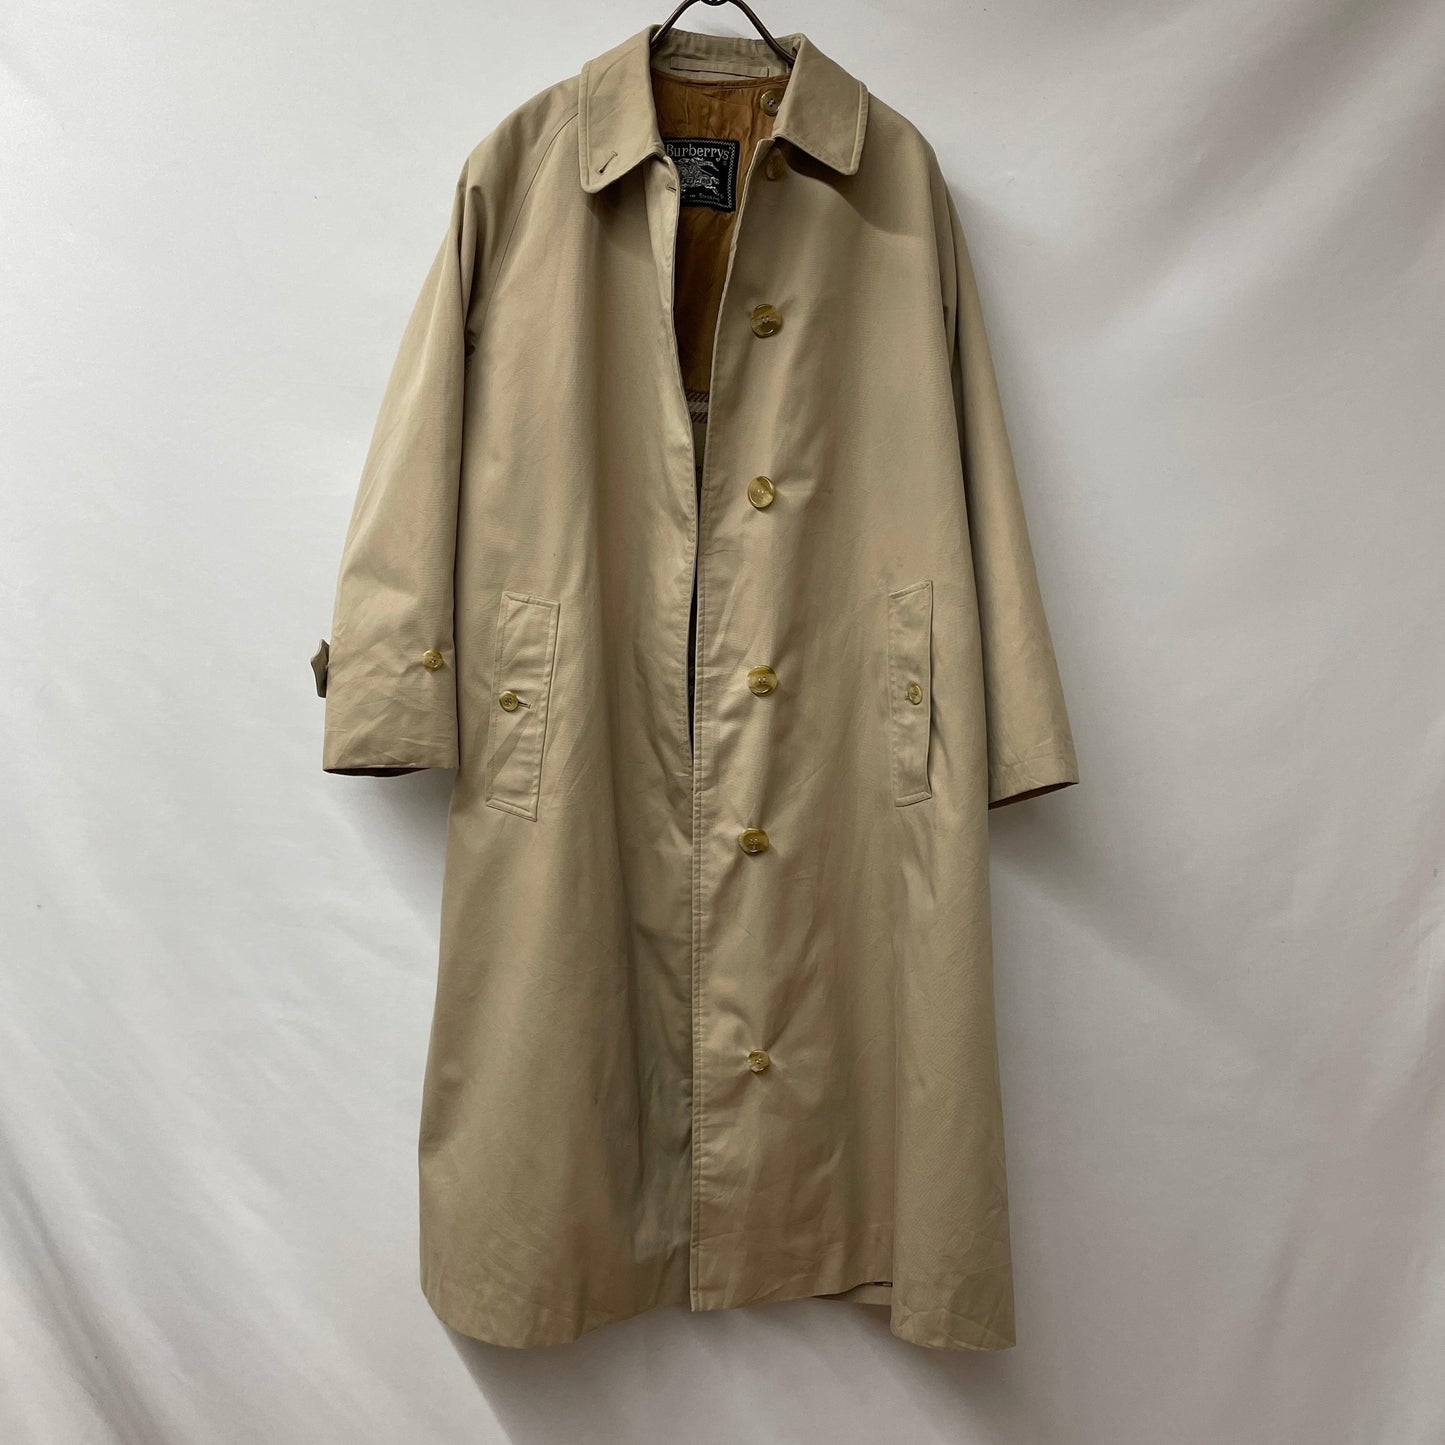 Burberrys coat Burmacan coat single sleeve stainless steel collar made in england rider coat